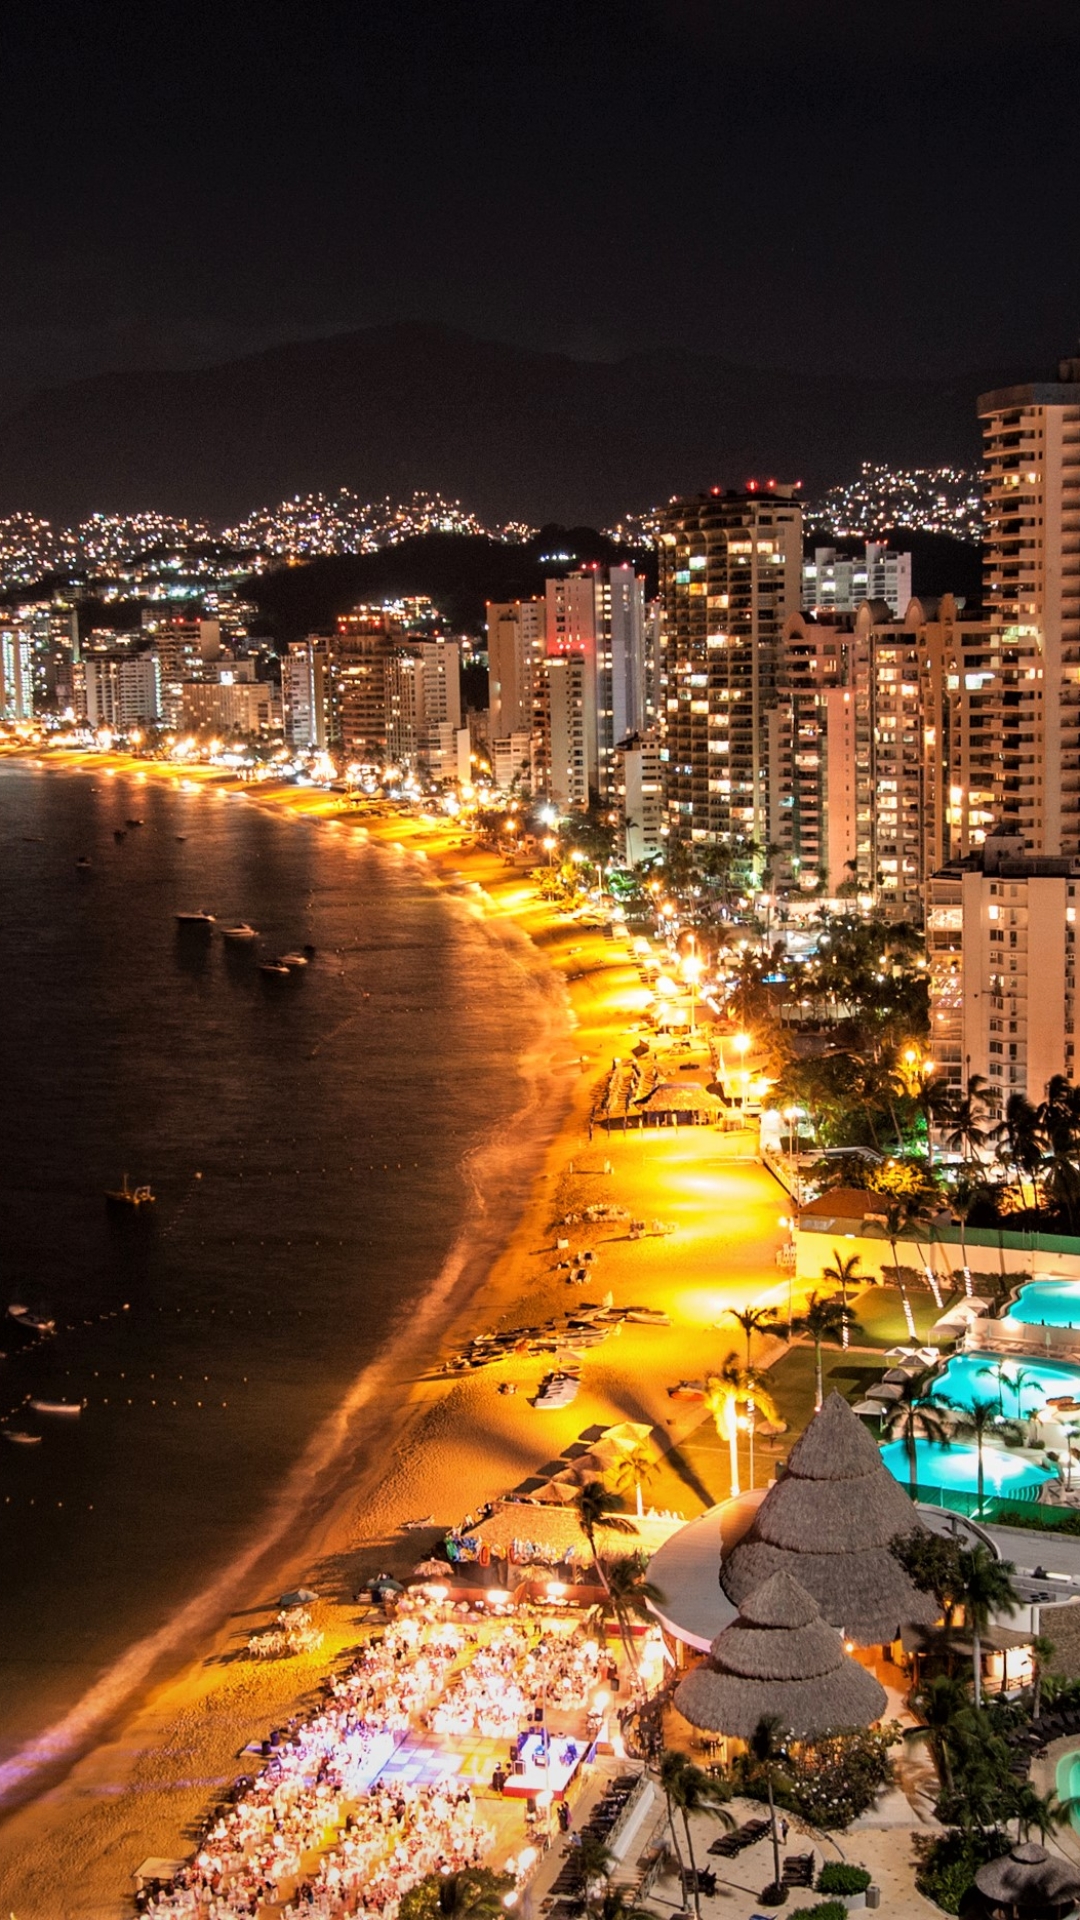 acapulco, beach, man made, city, mexico, building, night, coast, cities